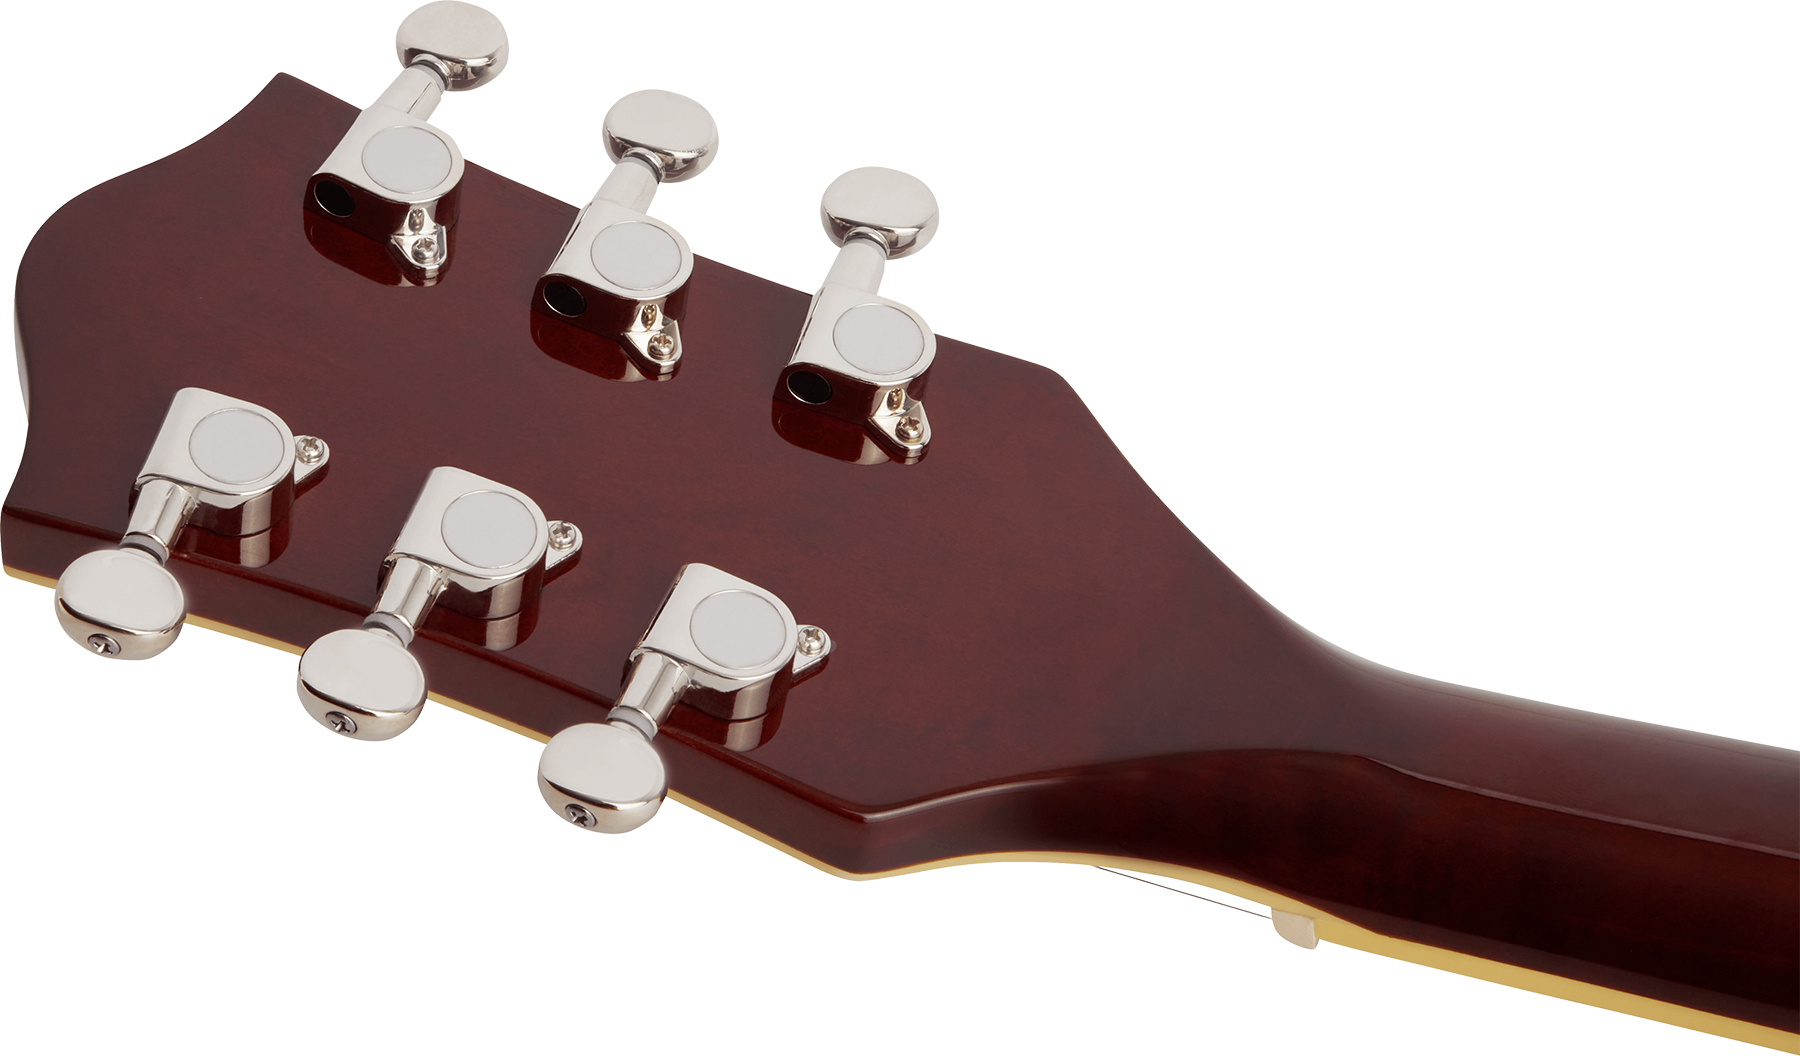 Gretsch G5622 Center Bloc Double Cut V-stoptail Electromatic Hh Ht Lau - Aged Walnut - Semi hollow elektriche gitaar - Variation 3